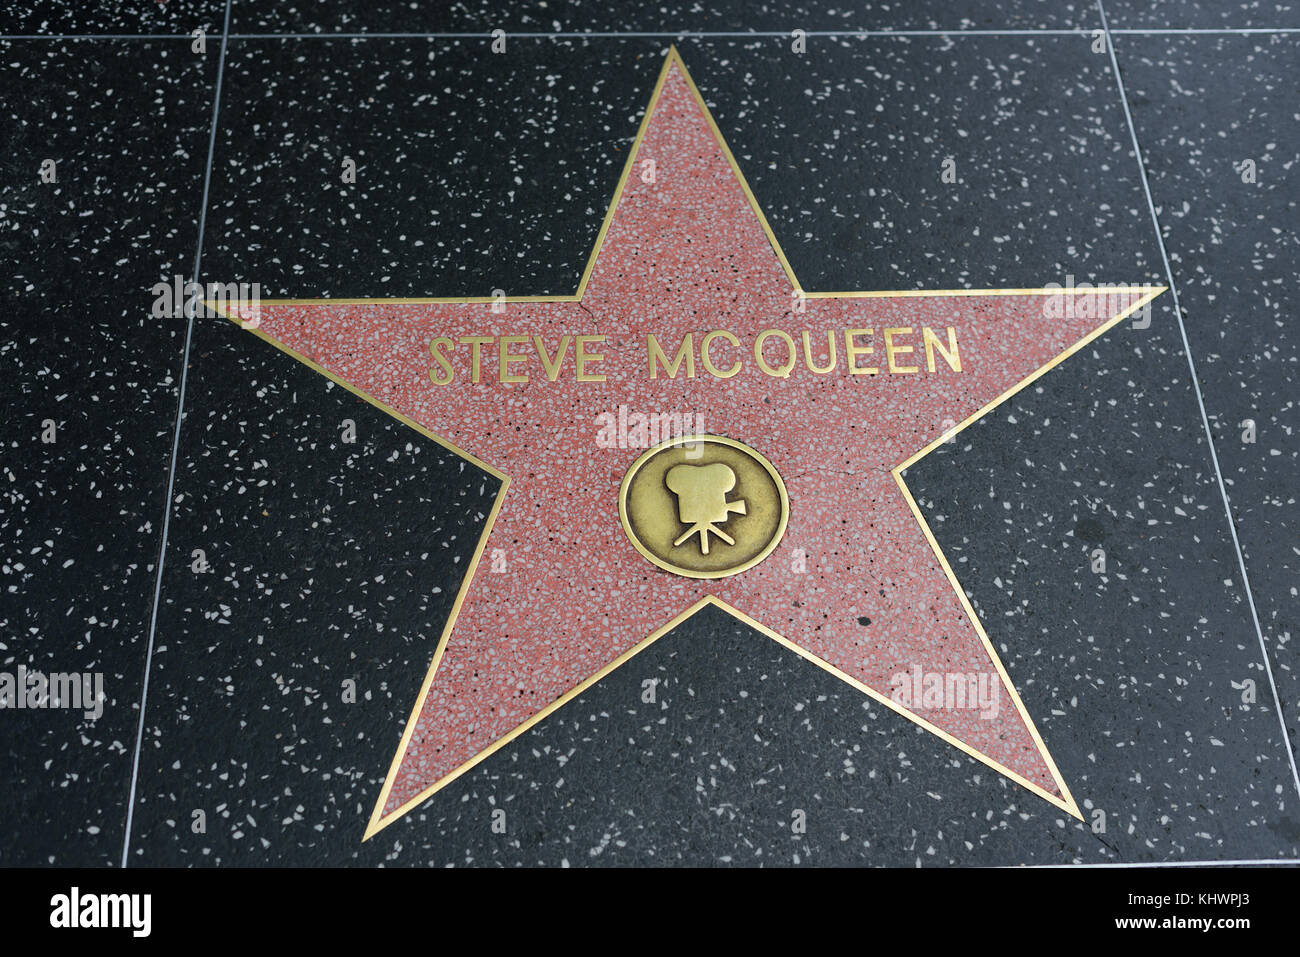 HOLLYWOOD, CA - DEZEMBER 06: Steve McQueen-Star auf dem Hollywood Walk of Fame in Hollywood, Kalifornien am 6. Dezember 2016. Stockfoto